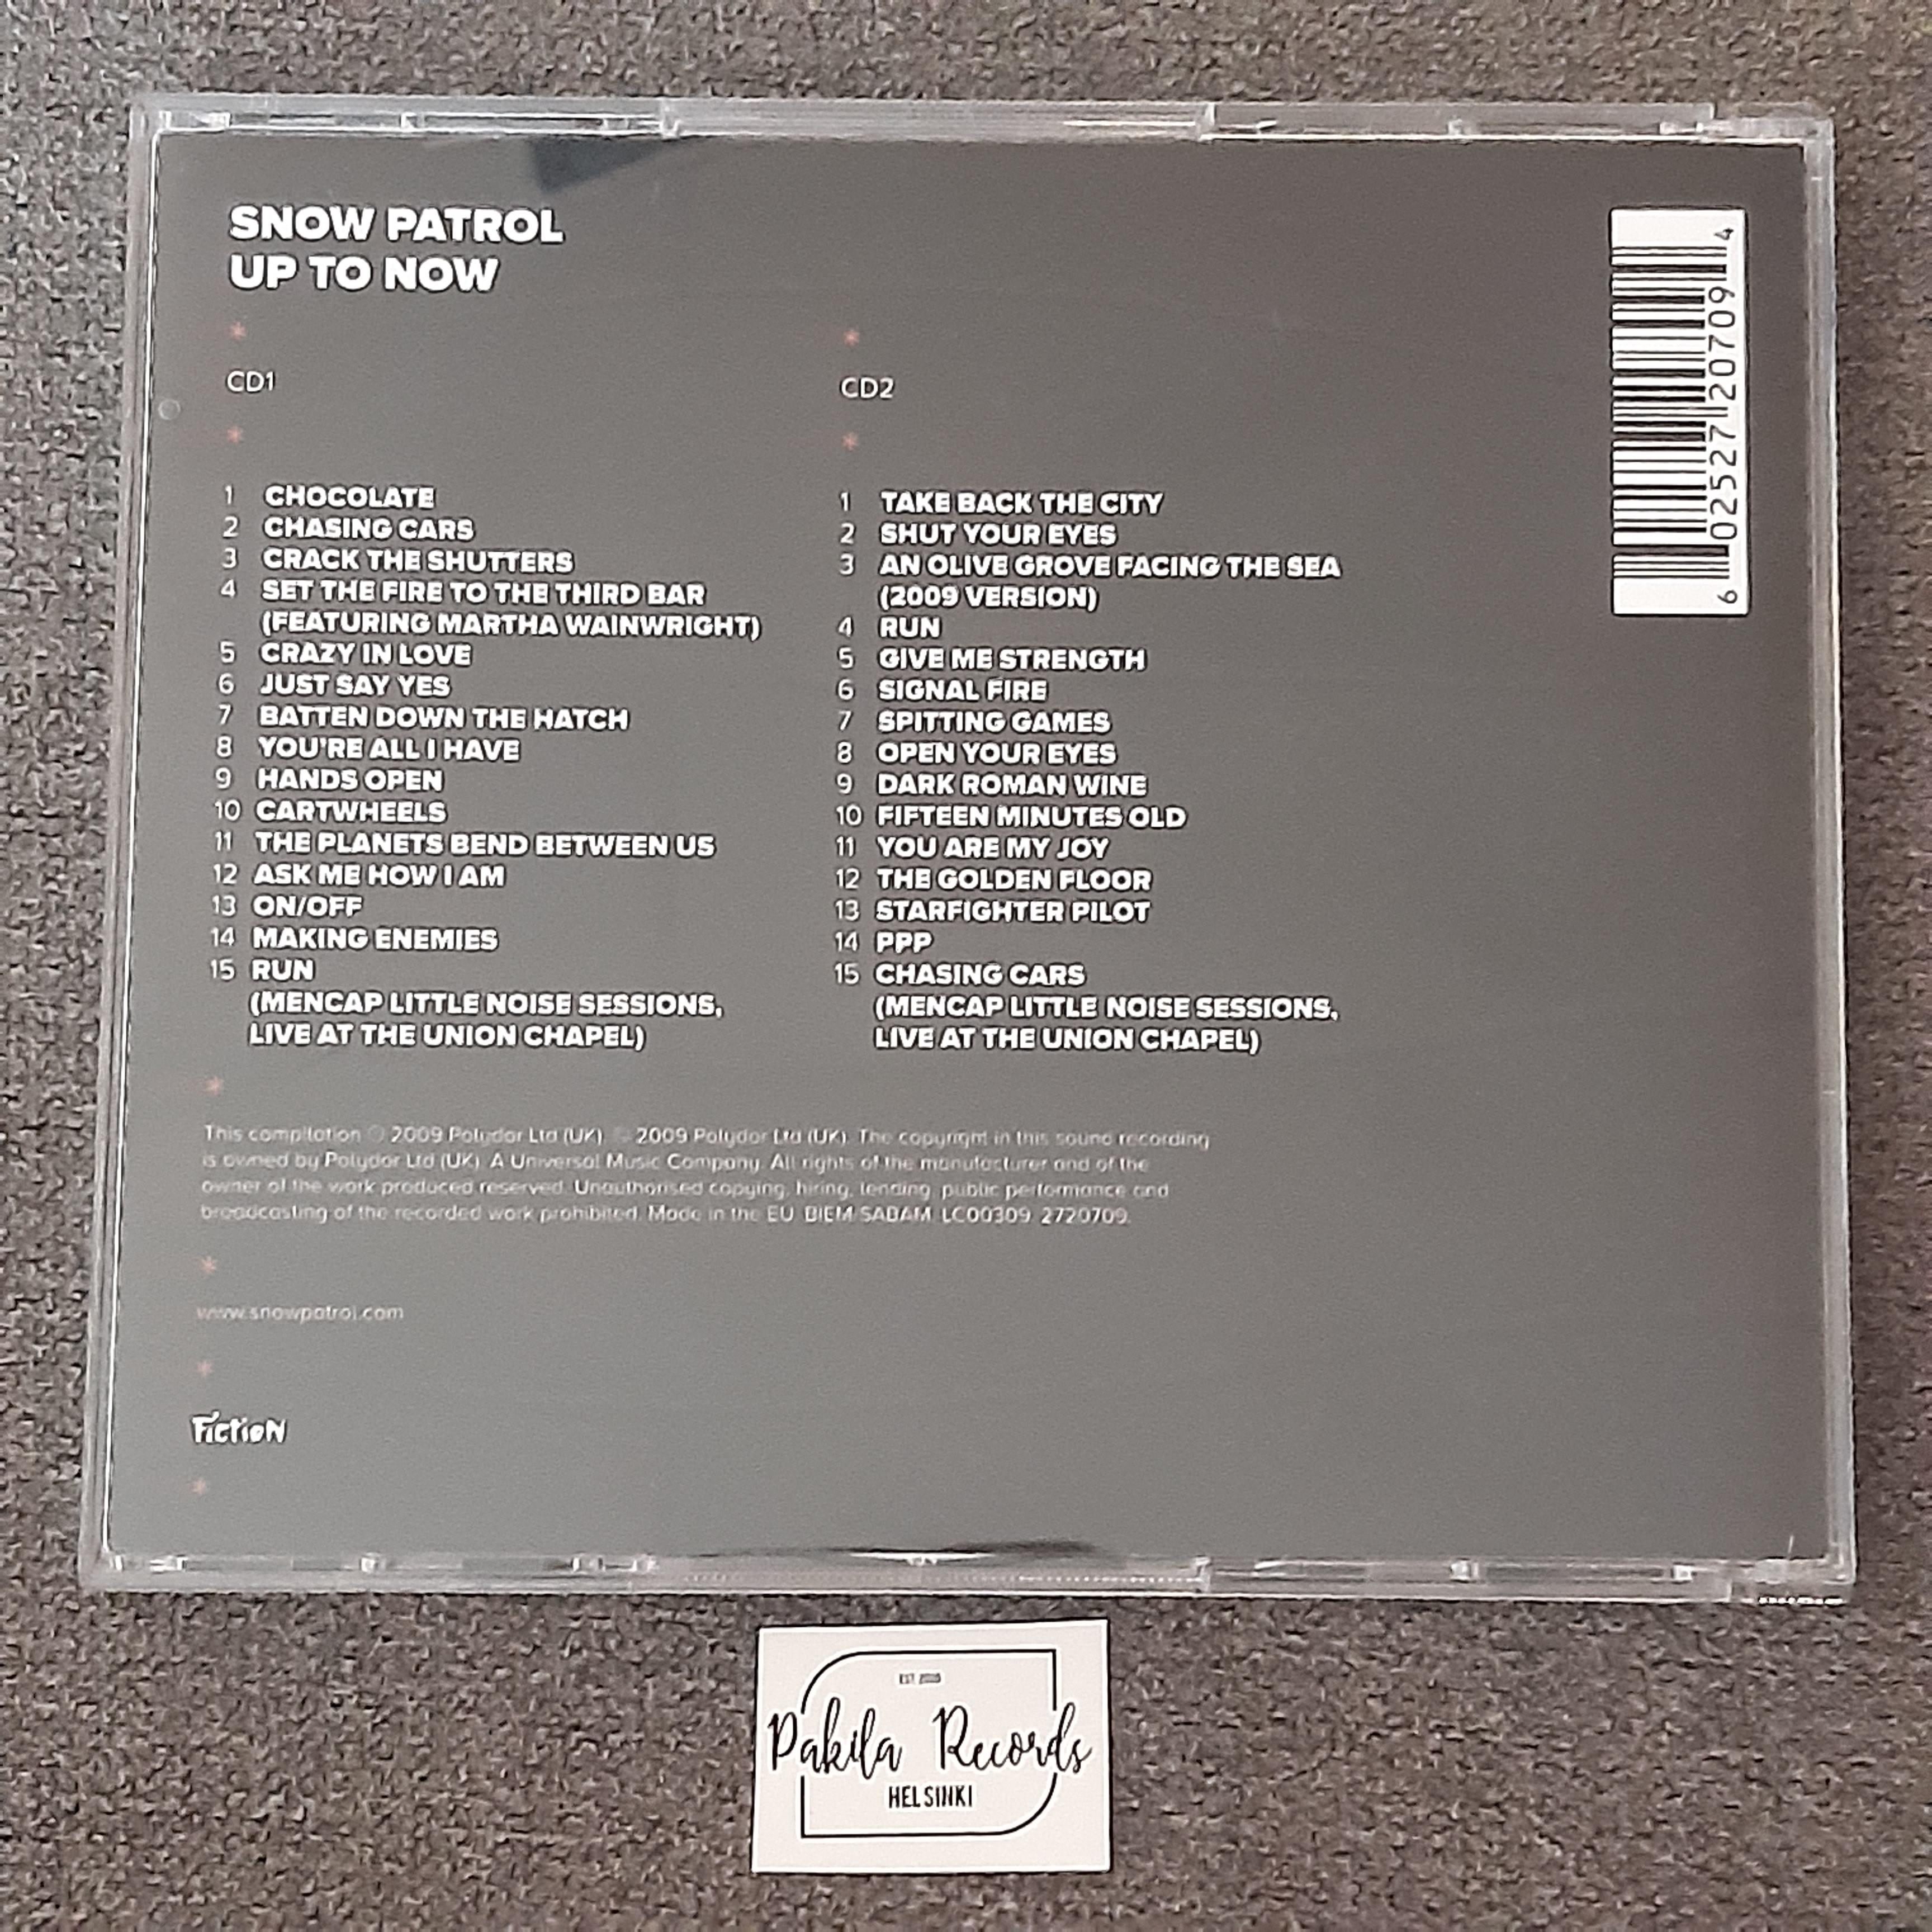 Snow Patrol - Up To Now - 2 CD (käytetty)